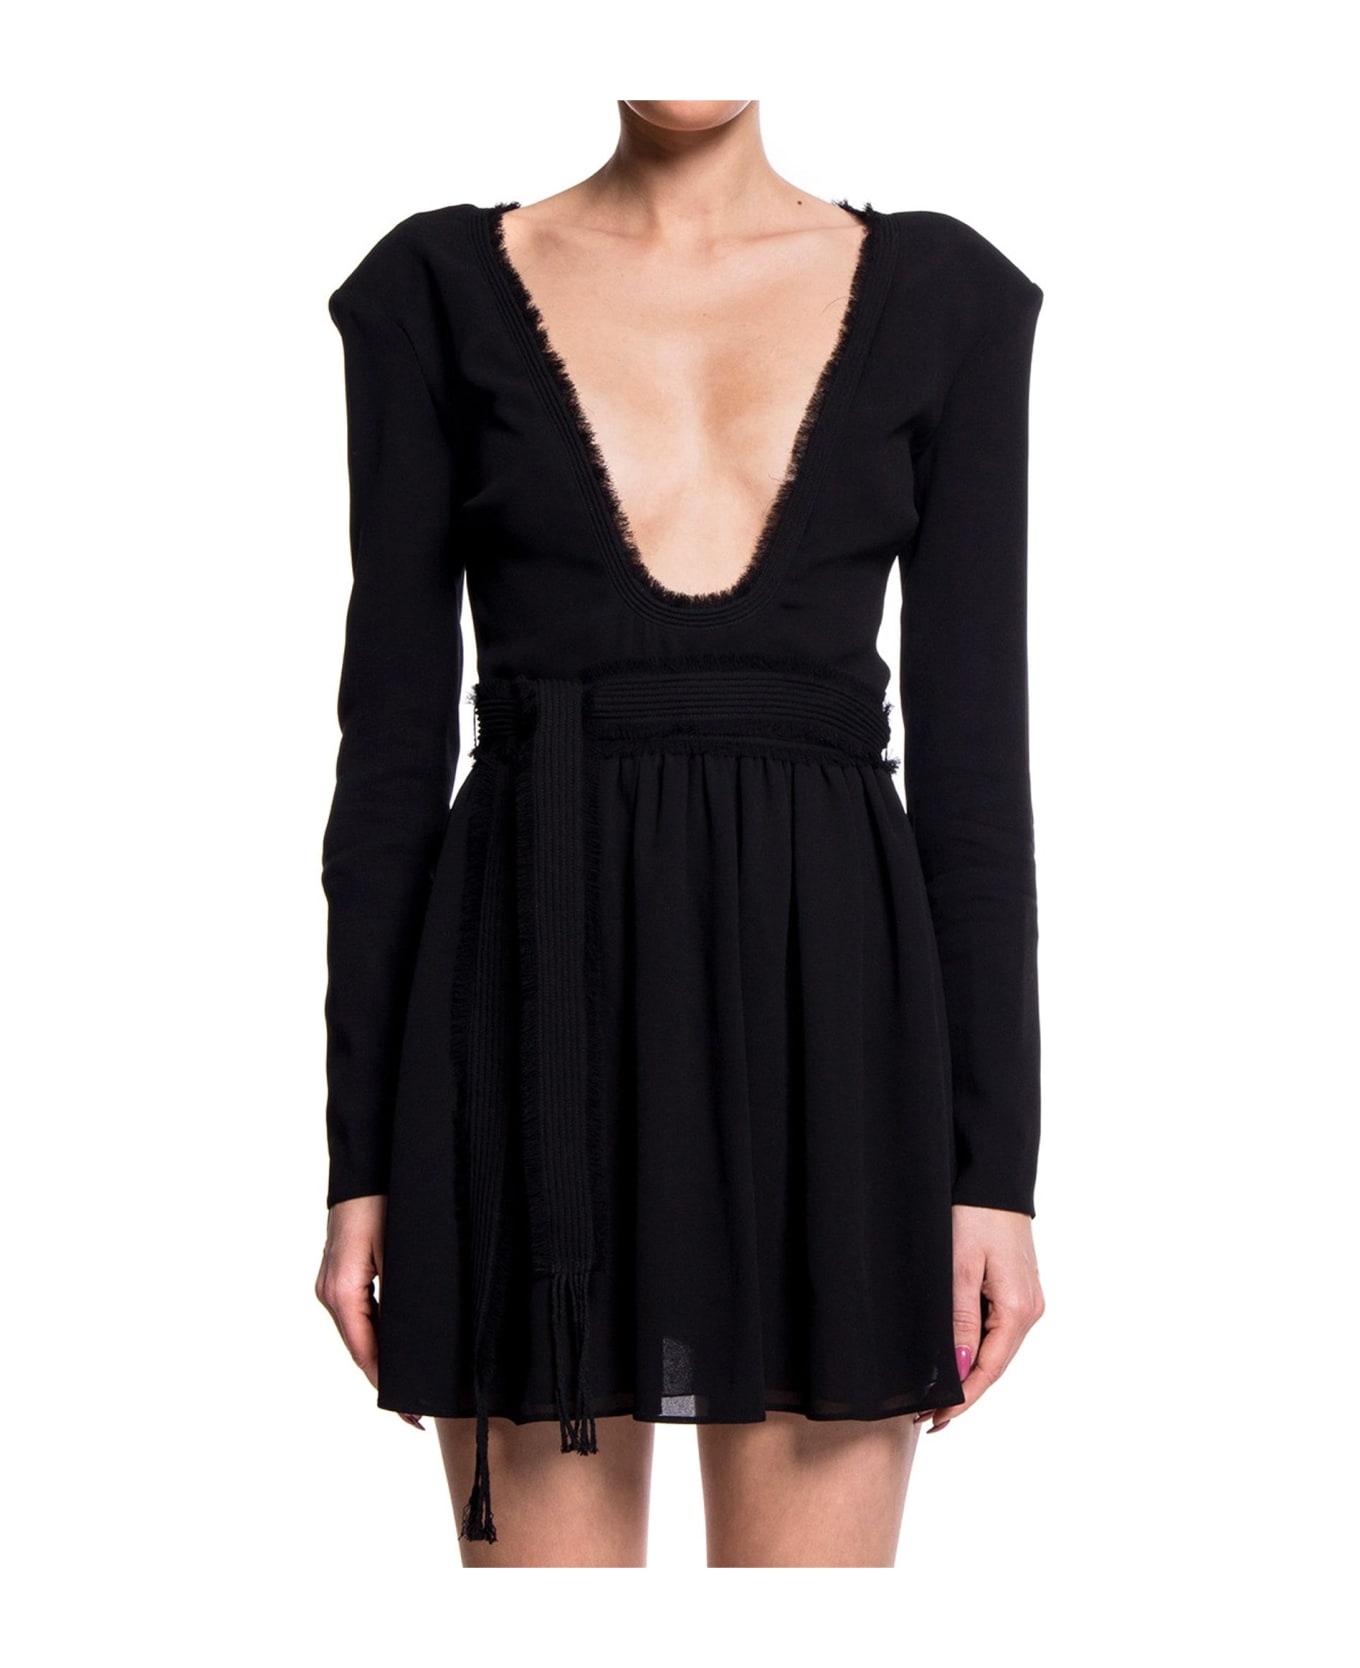 Saint Laurent Long Sleeves Dress - Black